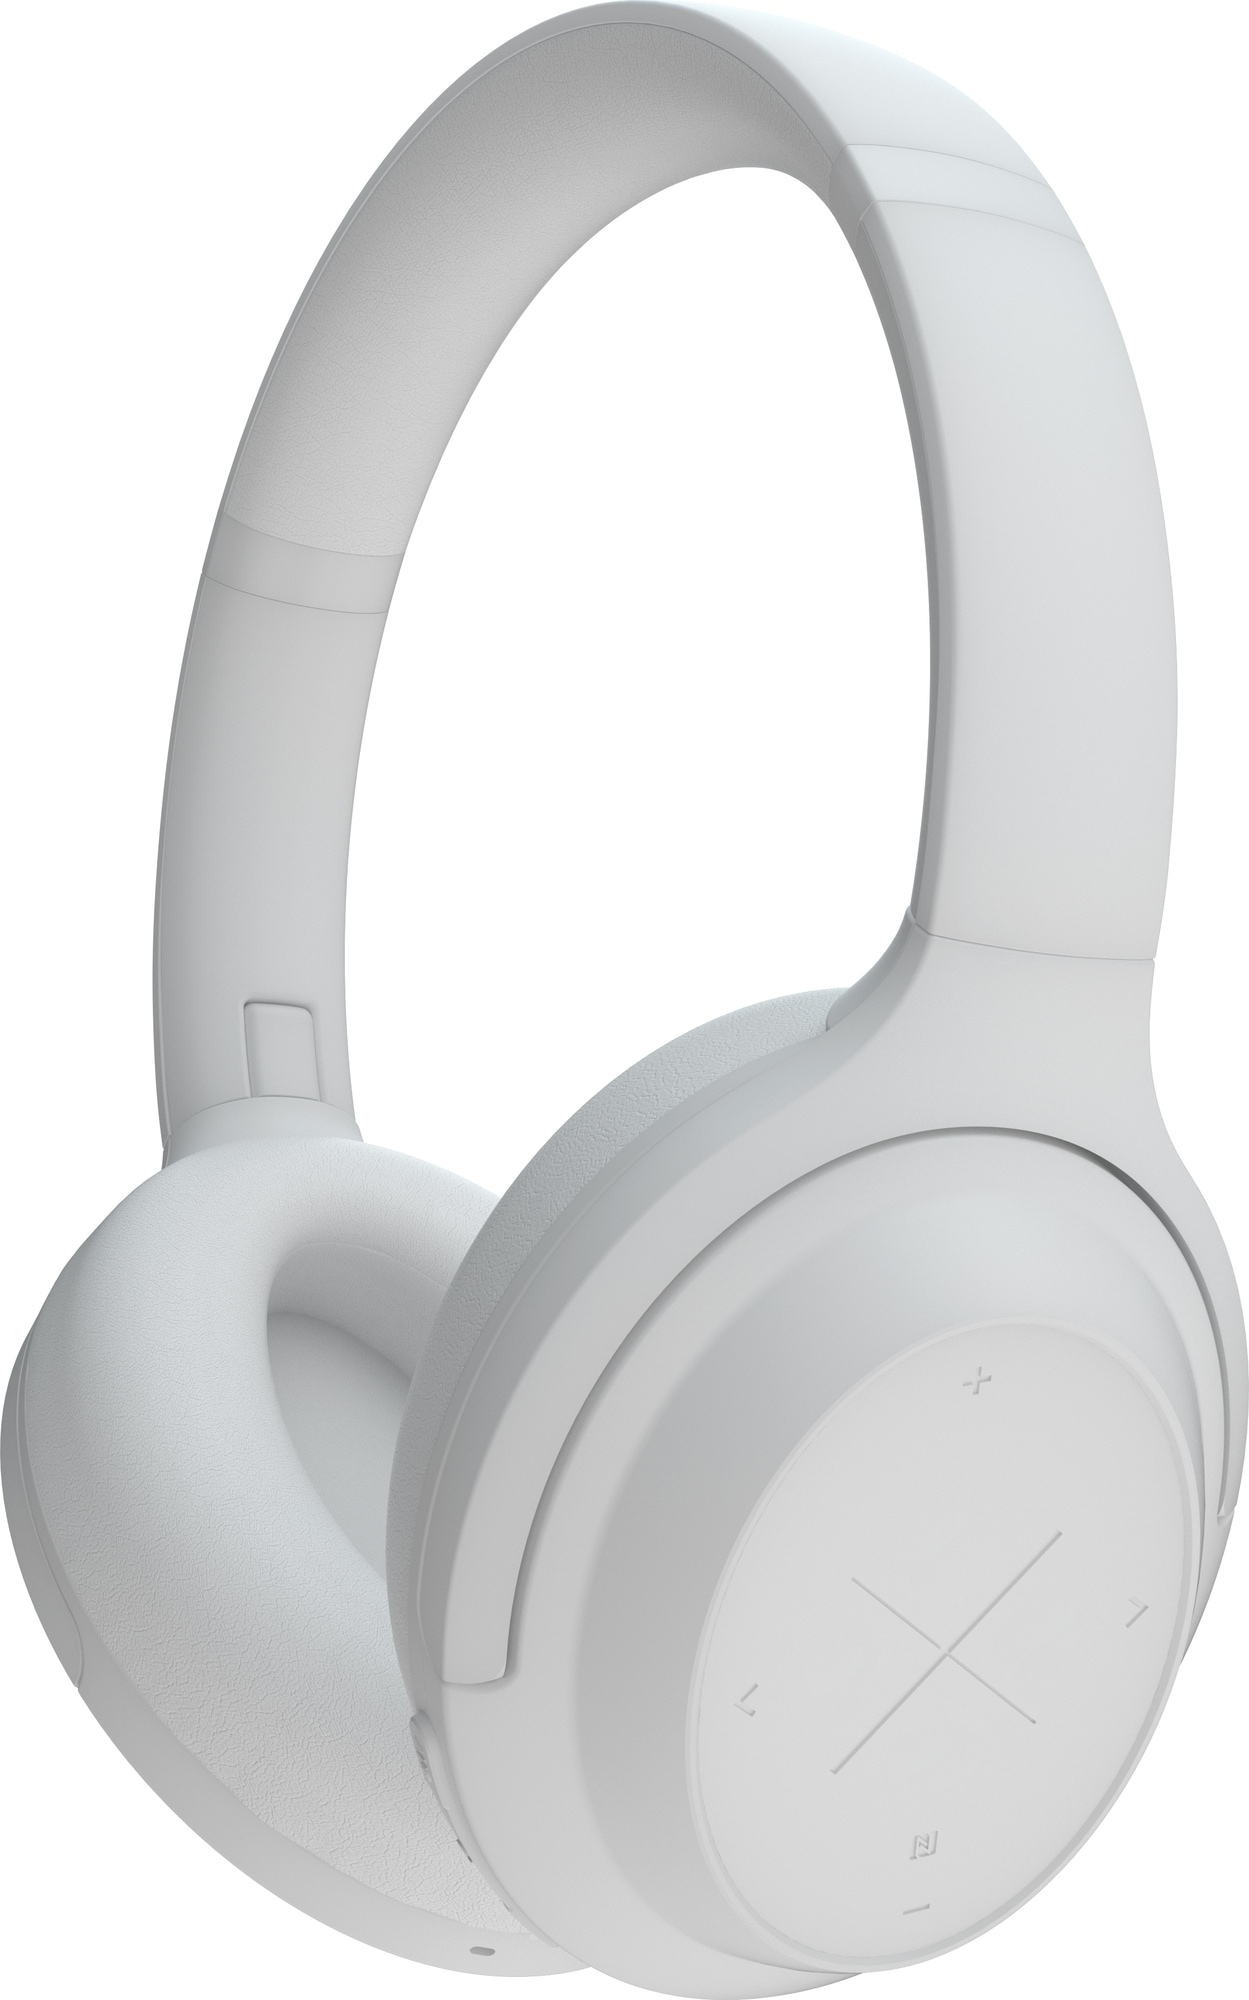 Kygo A11/800 trådløse around-ear hodetelefoner (hvit) - Elkjøp